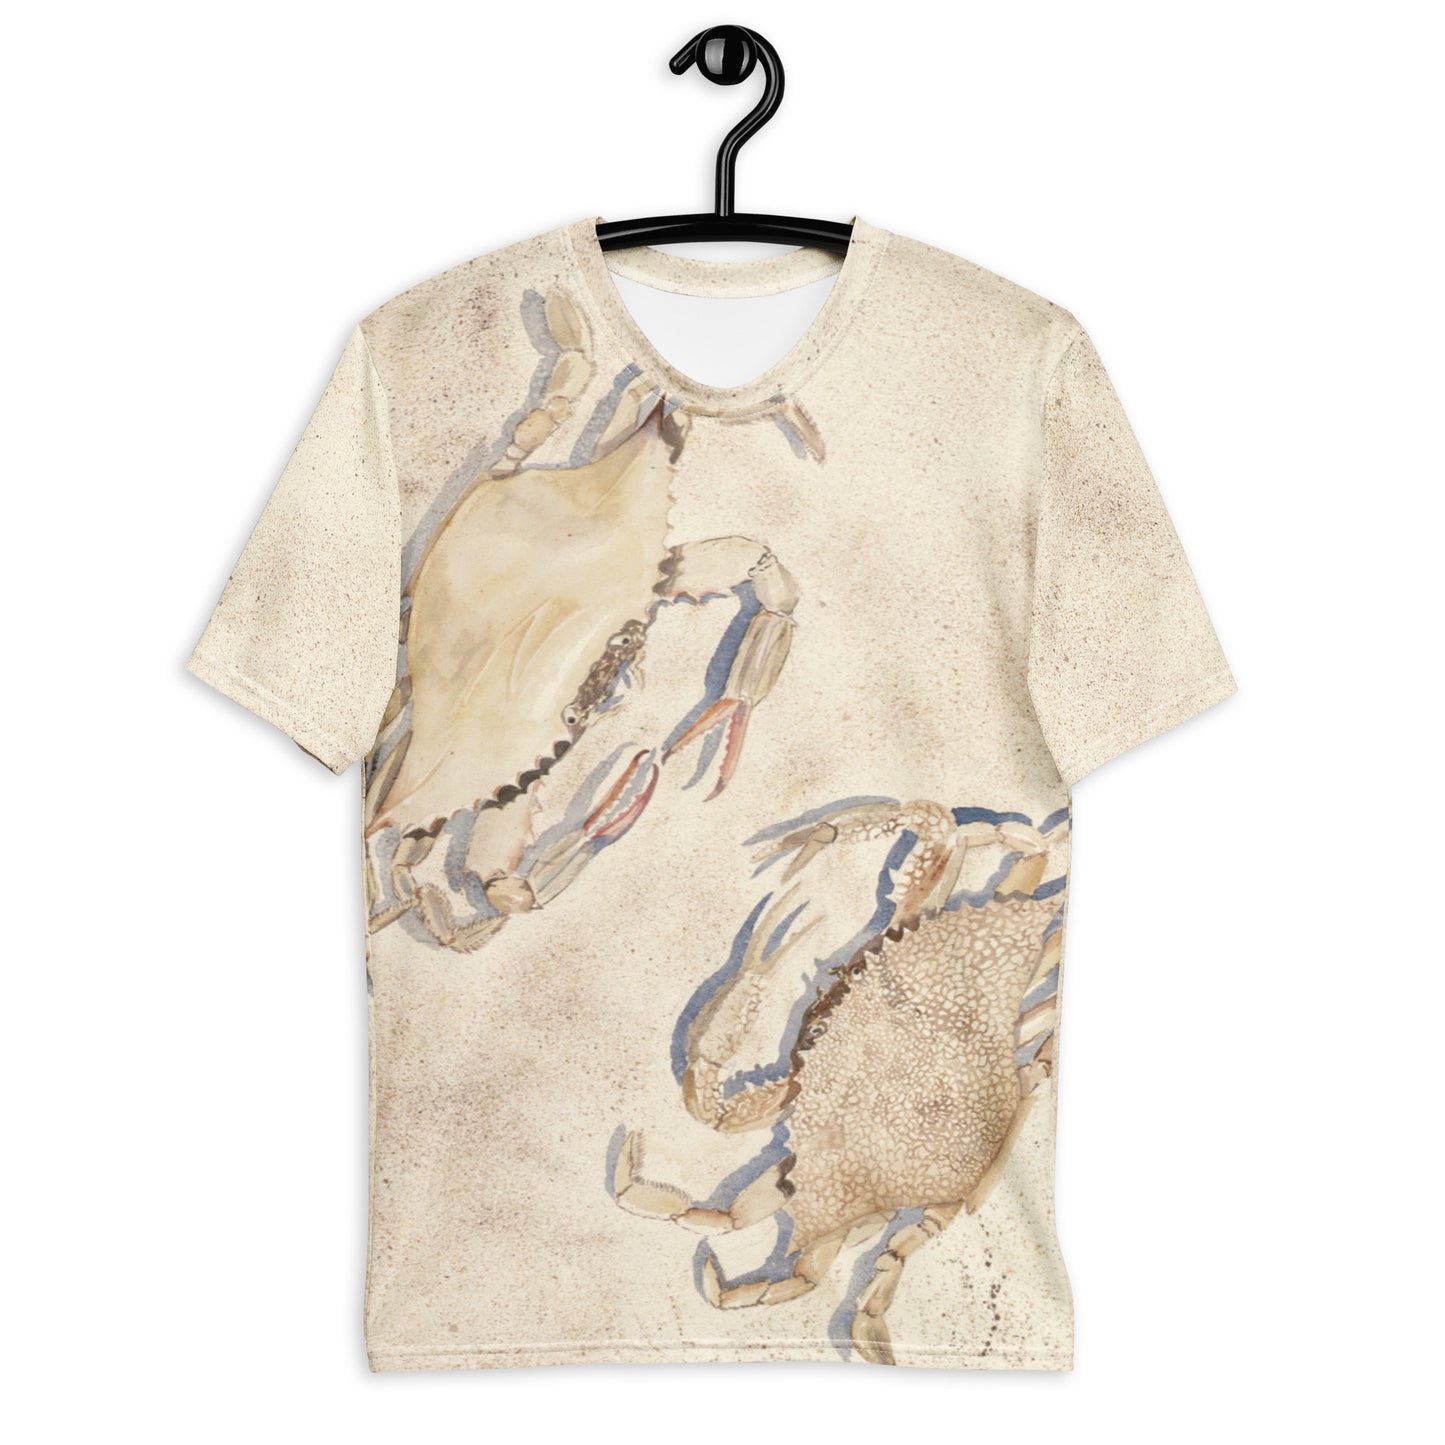 Sanibel Crabs Watercolor Men's Shirt